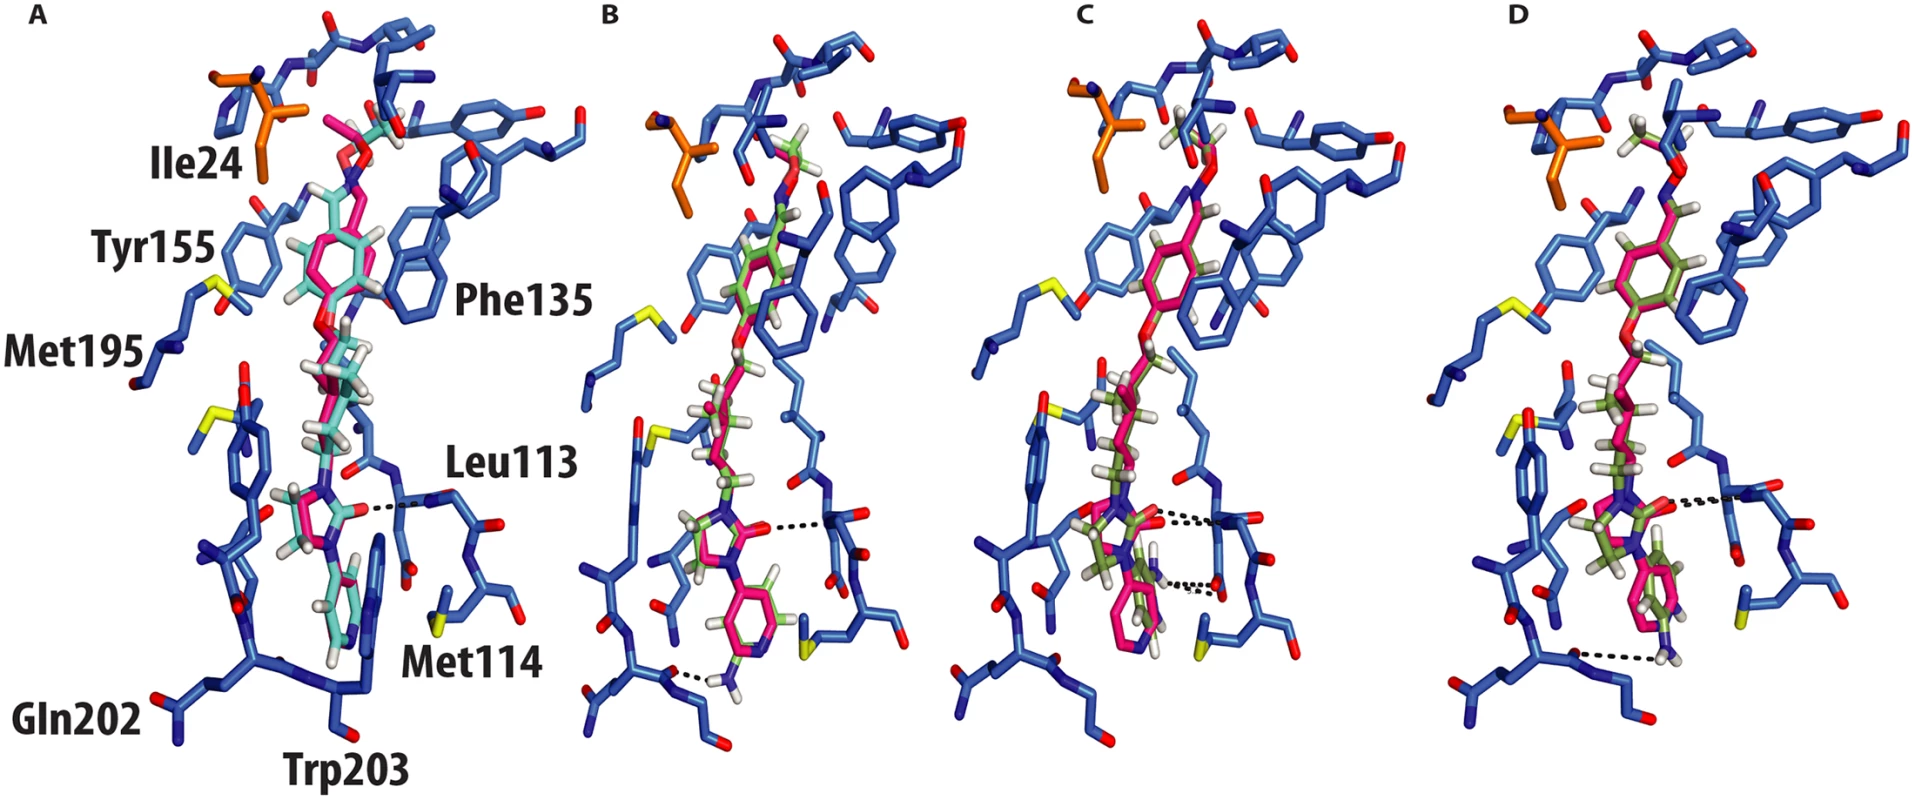 Molecular docking of GPP3 and NLD into the VP1 pocket.